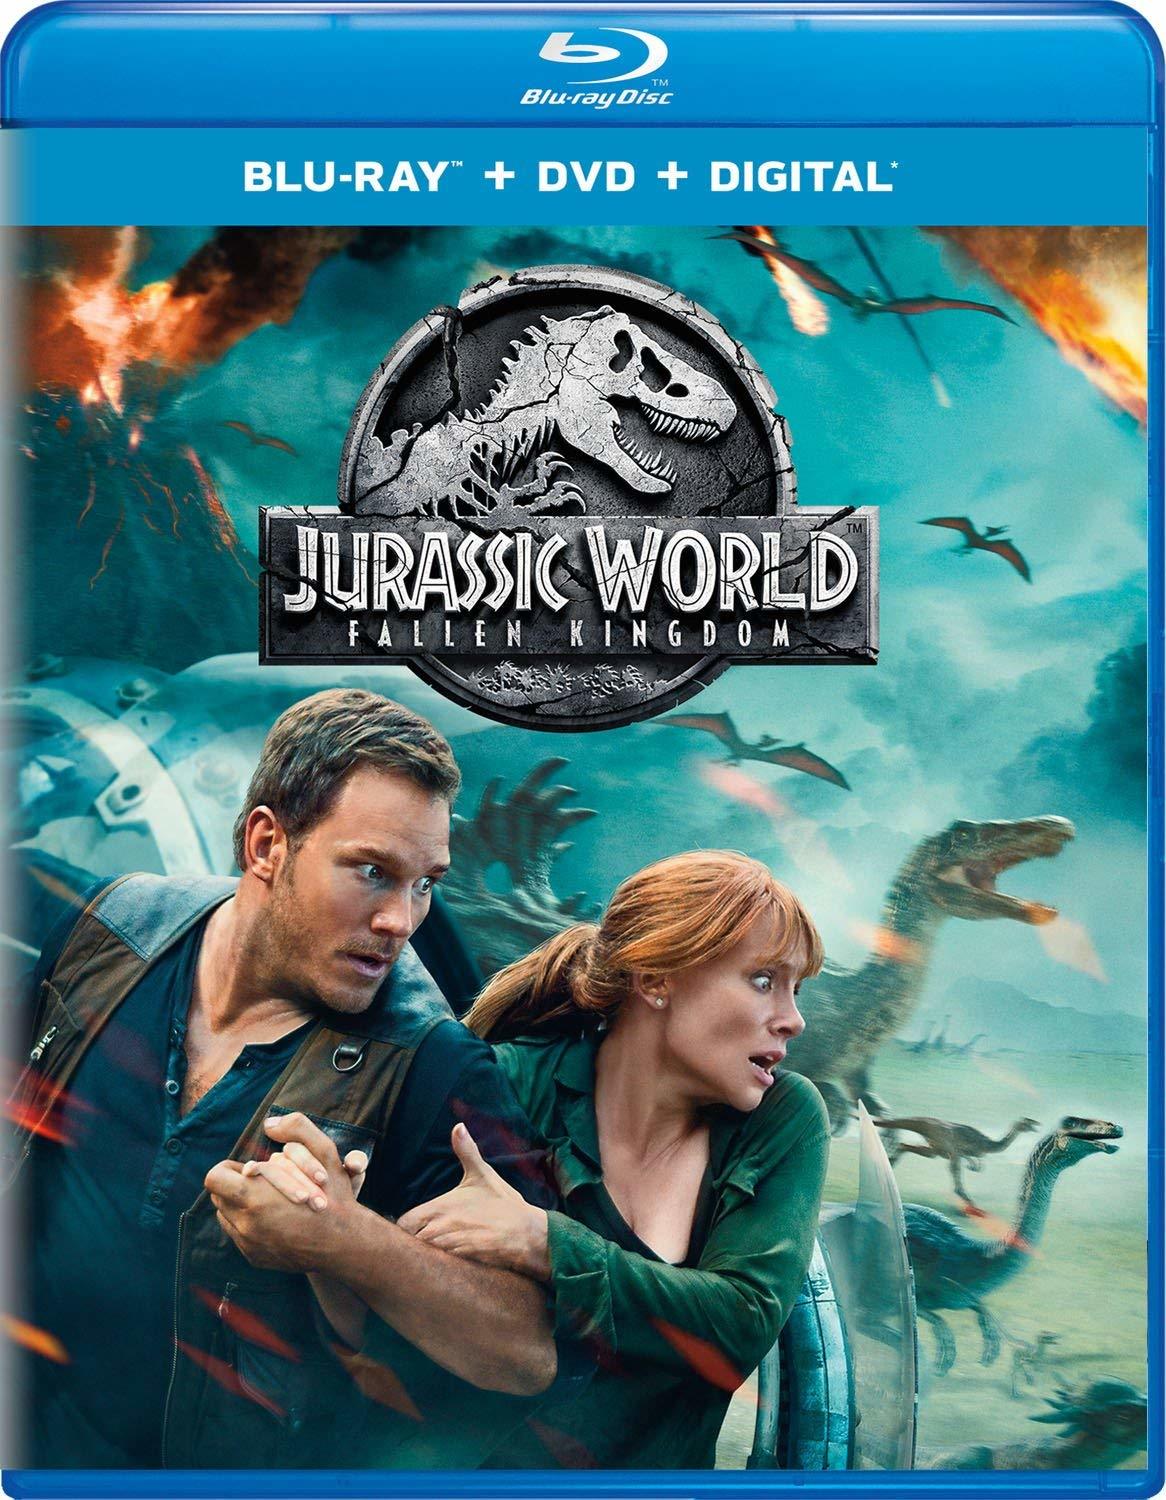 caido - Jurassic World: Fallen Kingdom (2018) Jurassic World: El Reino Caído (2018) [DTS 5.1 + SUP] [Blu Ray-Rip] 208164_front